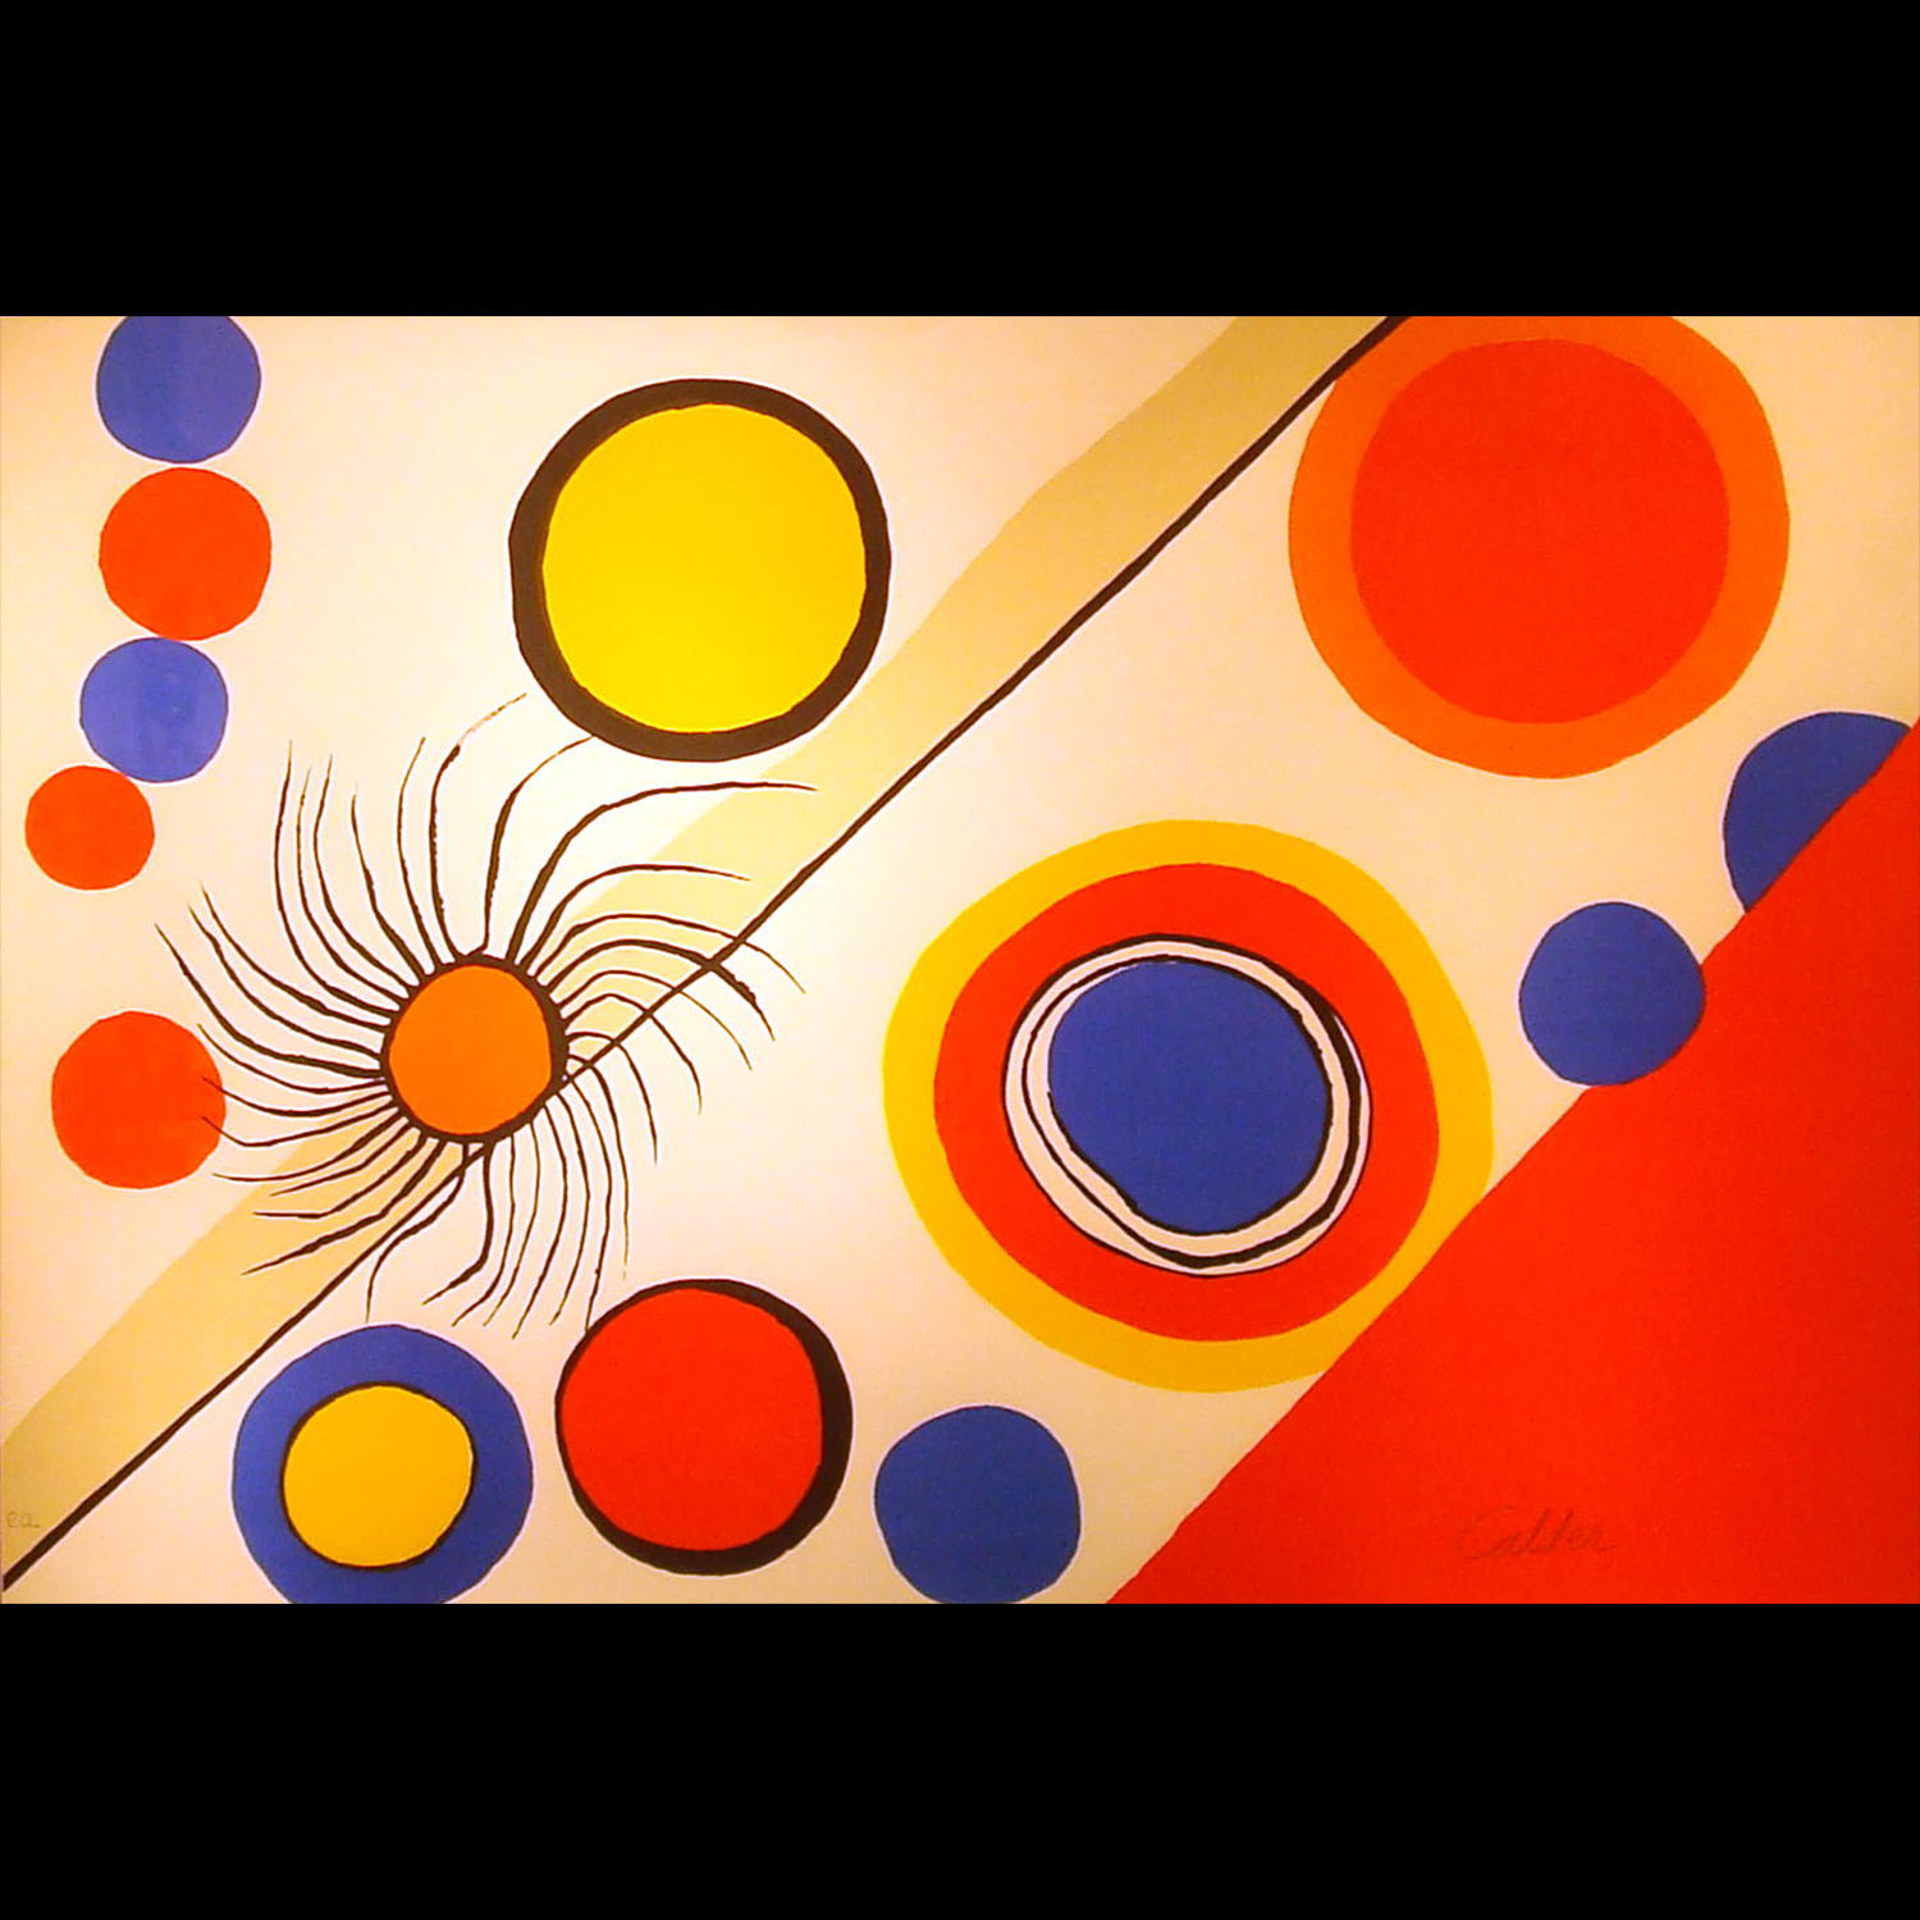 Blue, Orange and Red Spheres by Alexander Calder